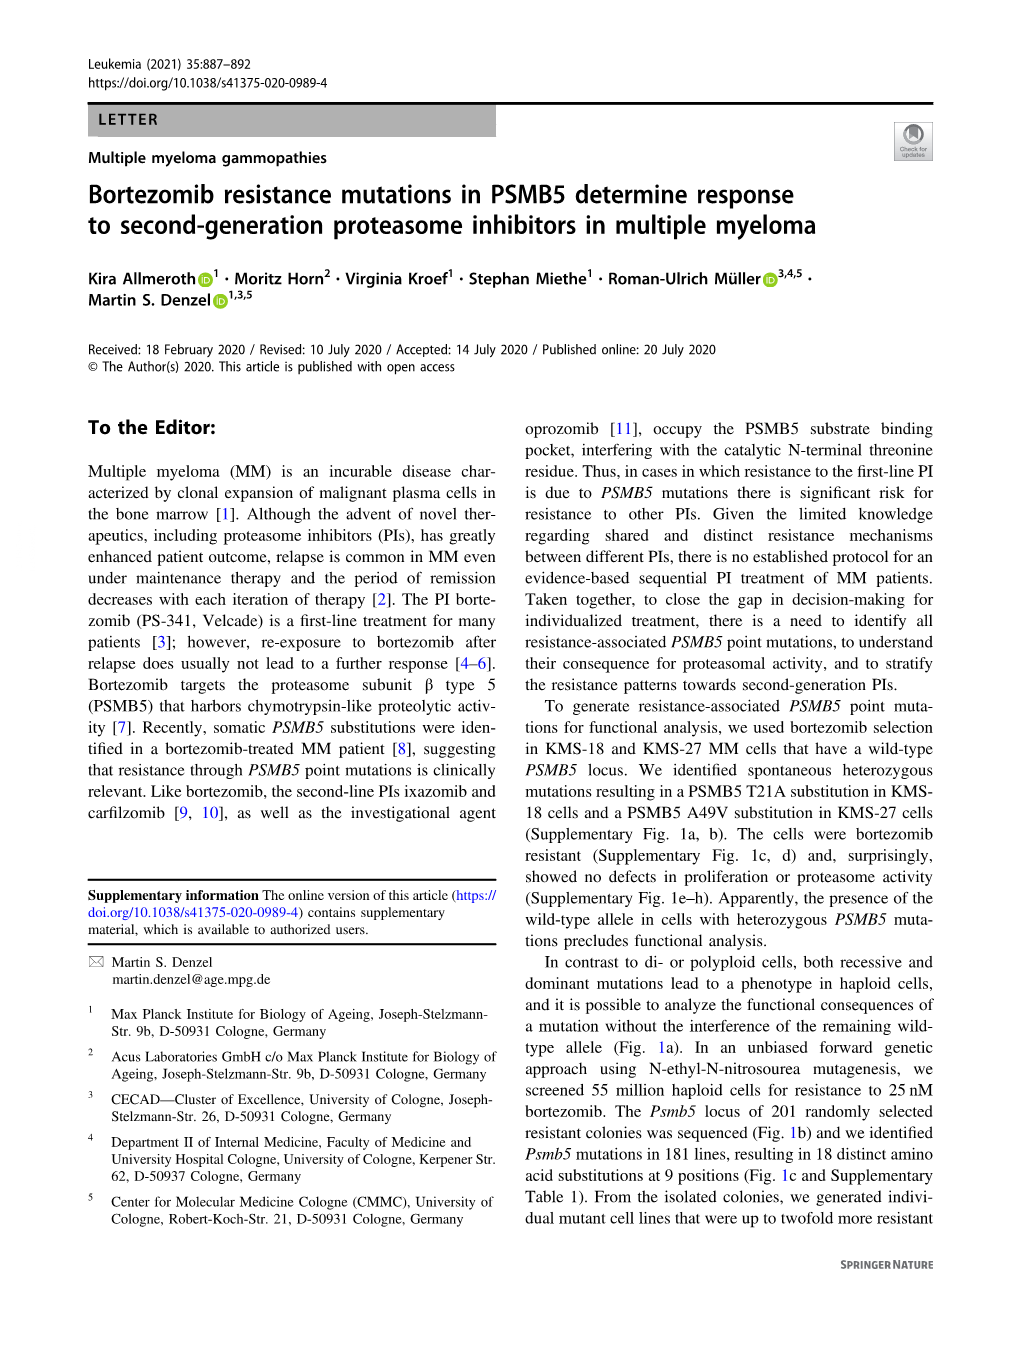 Bortezomib Resistance Mutations in PSMB5 Determine Response to Second-Generation Proteasome Inhibitors in Multiple Myeloma